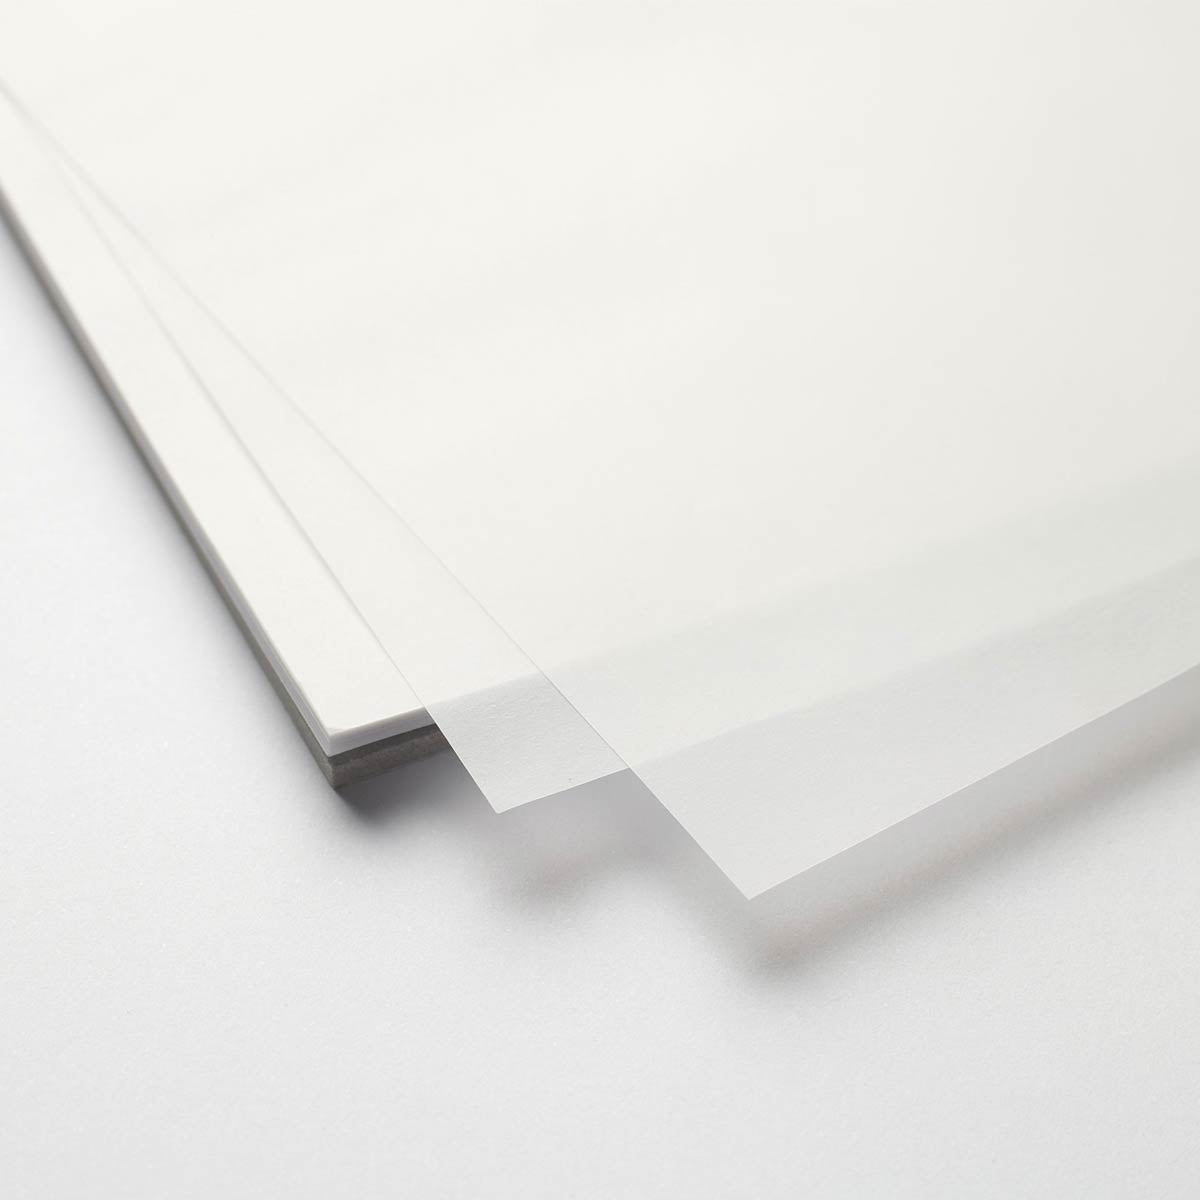 Winsor &amp; Newton-Bloc de papier calque-70gsm - A3